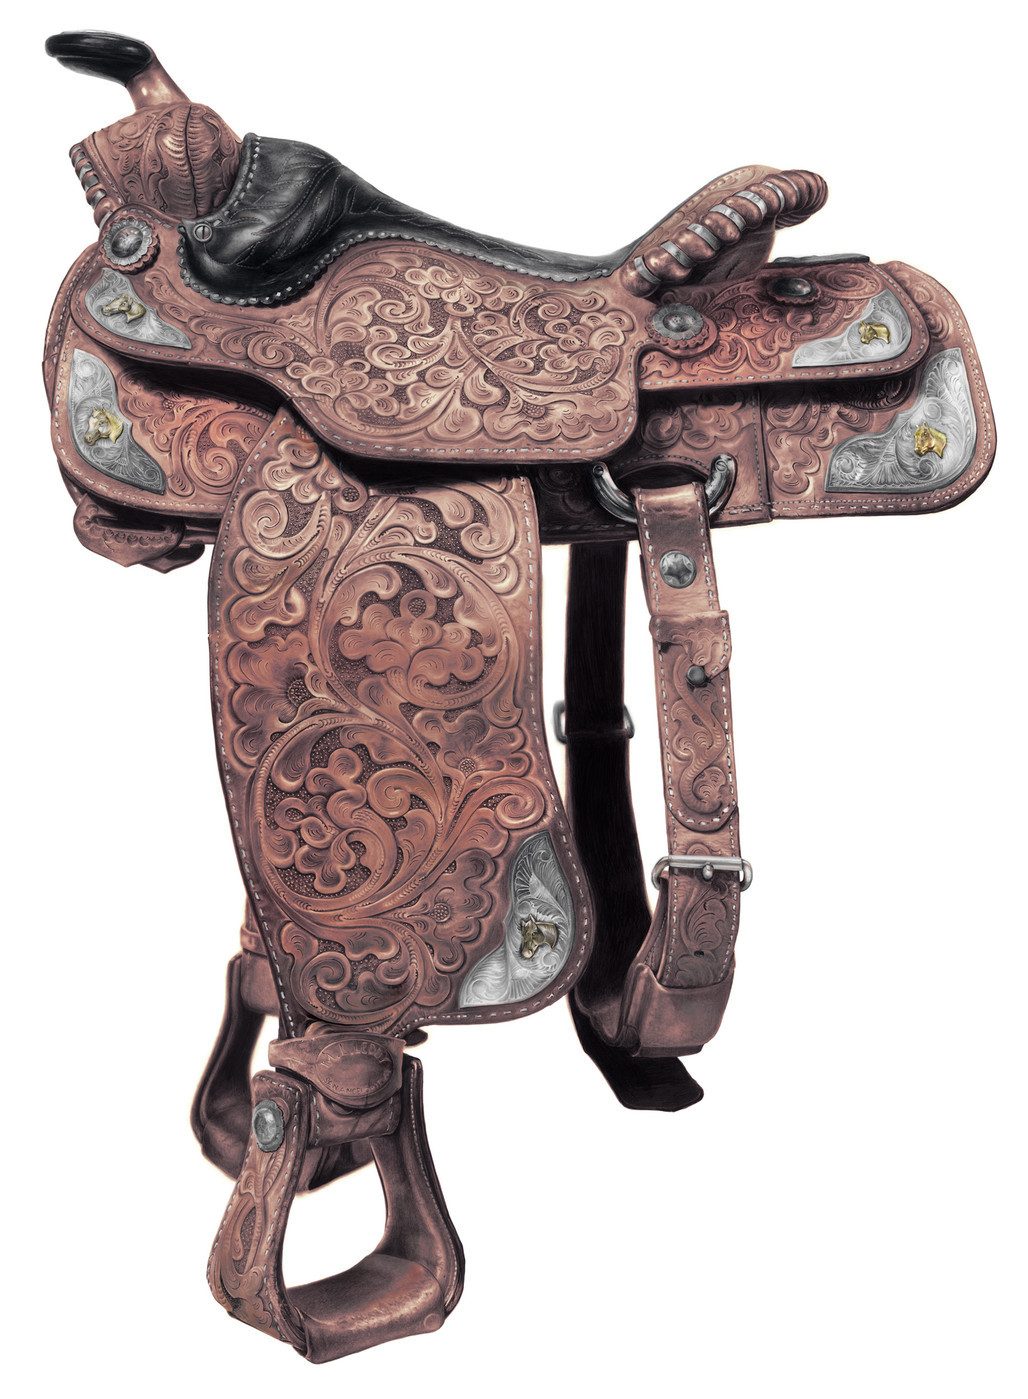 Photorealistic drawing of detailed saddle